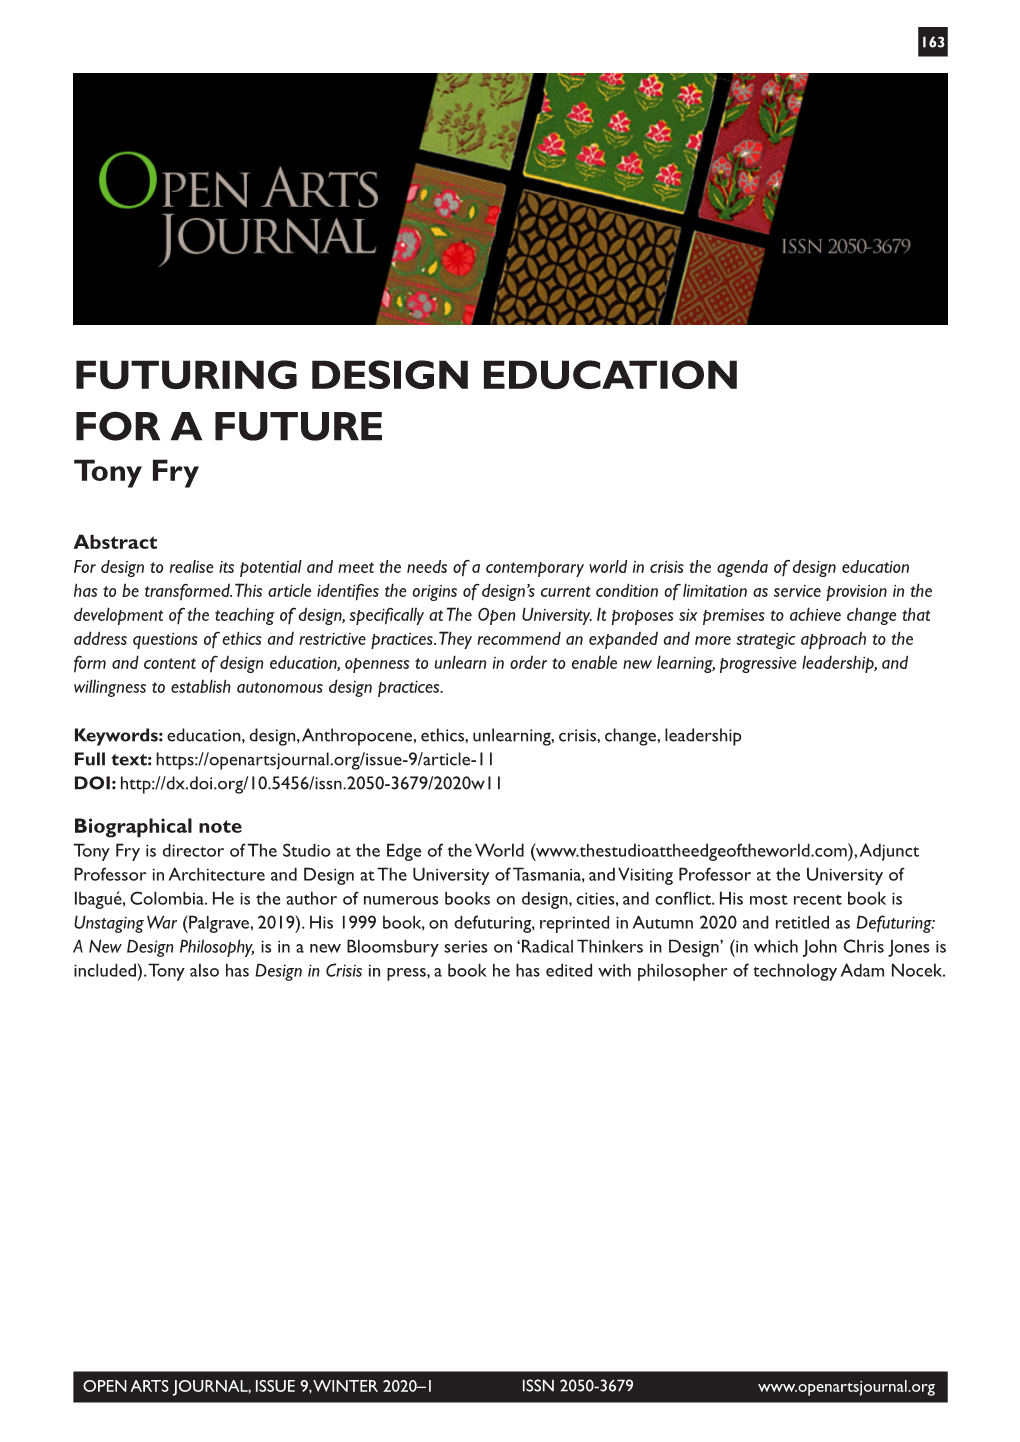 FUTURING DESIGN EDUCATION for a FUTURE Tony Fry